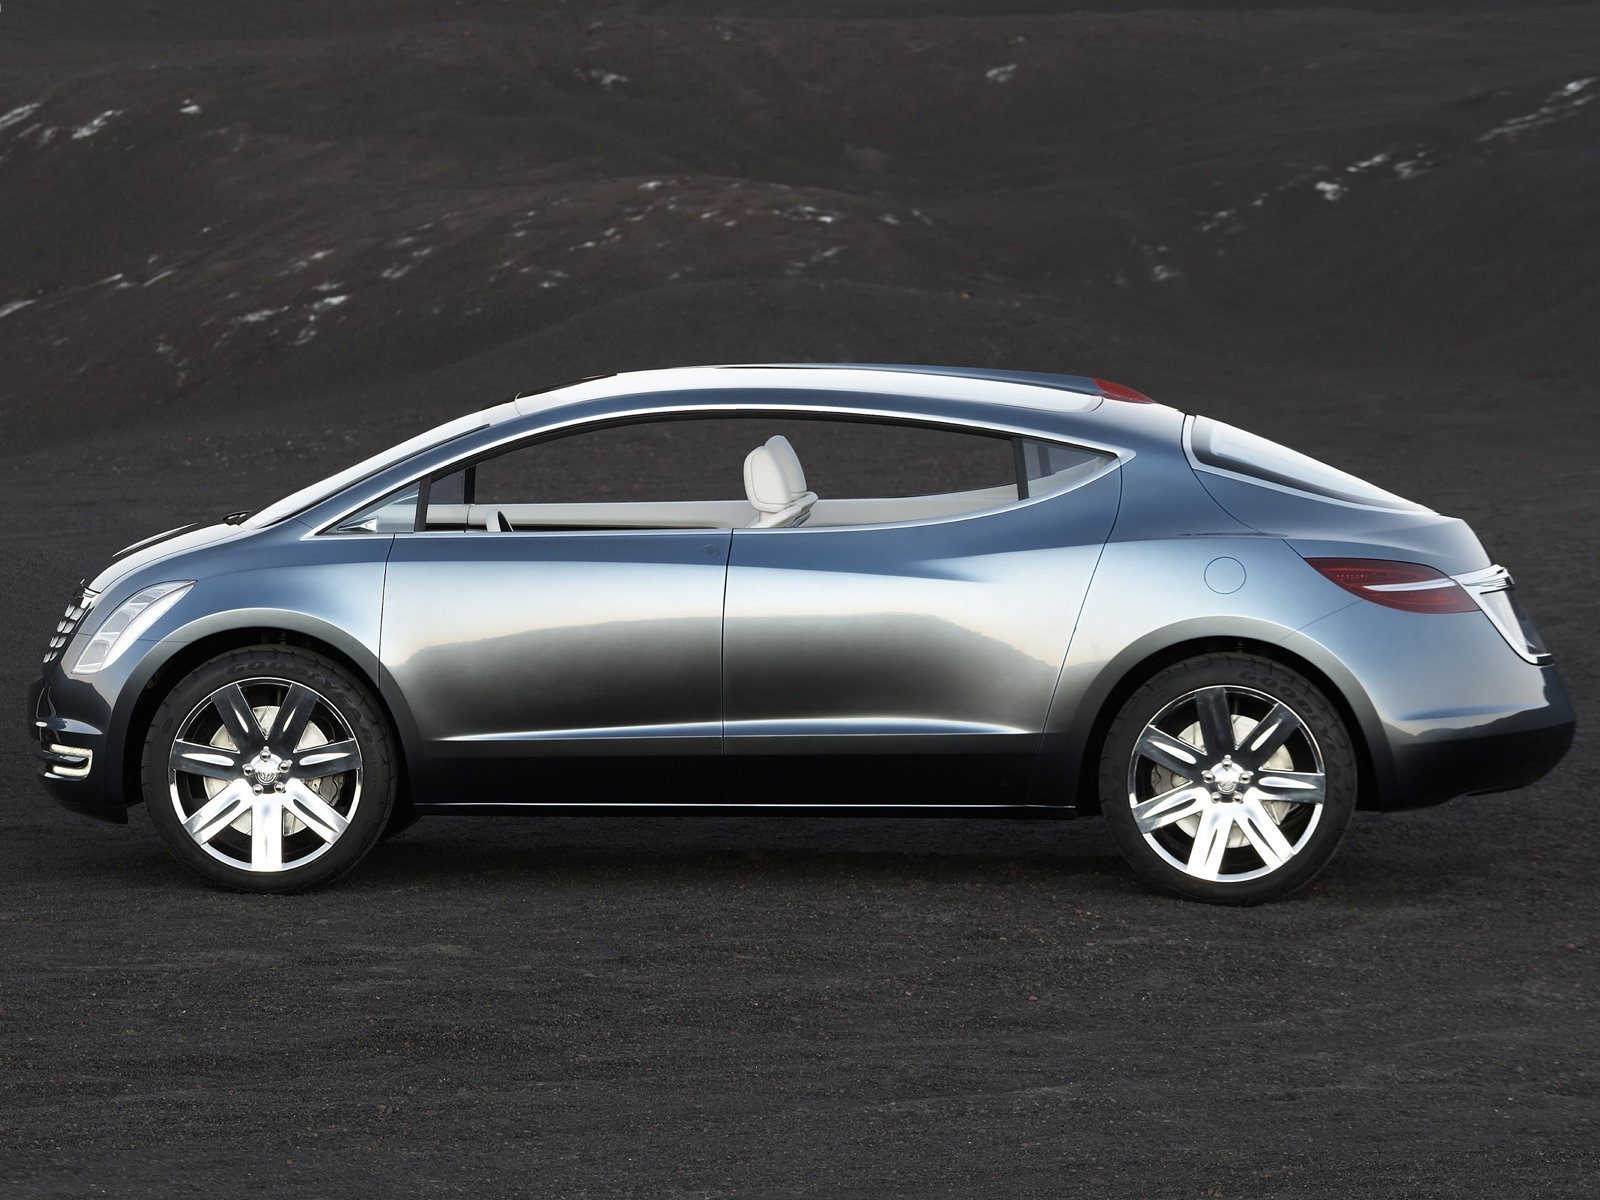 Chrysler range-extended electric vehicle